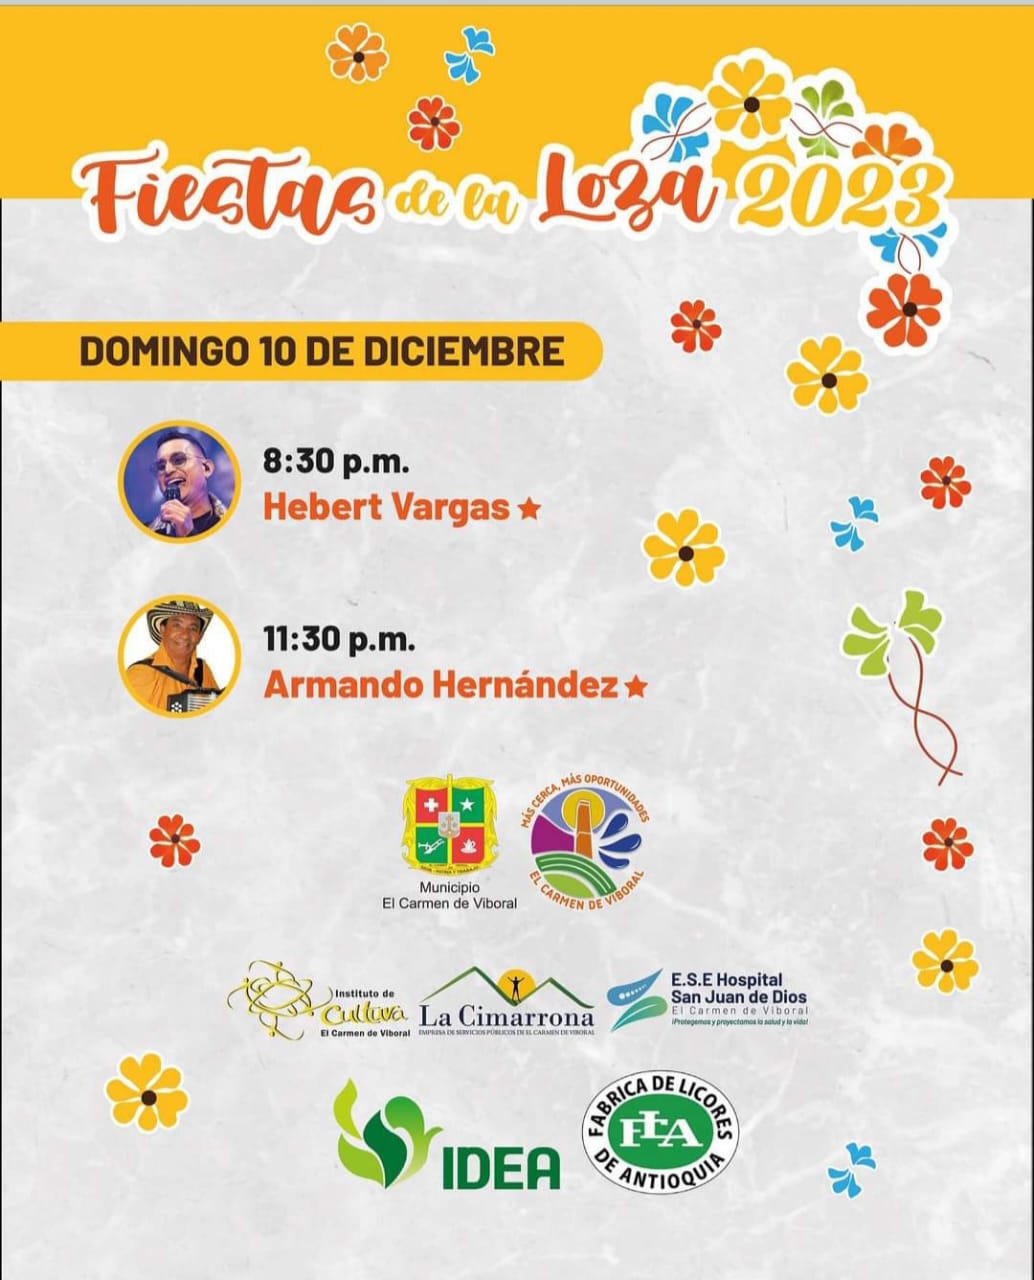 Fiestas de la Loza 2023 - D10 b- - El Carmen de Viboral - Antioquia